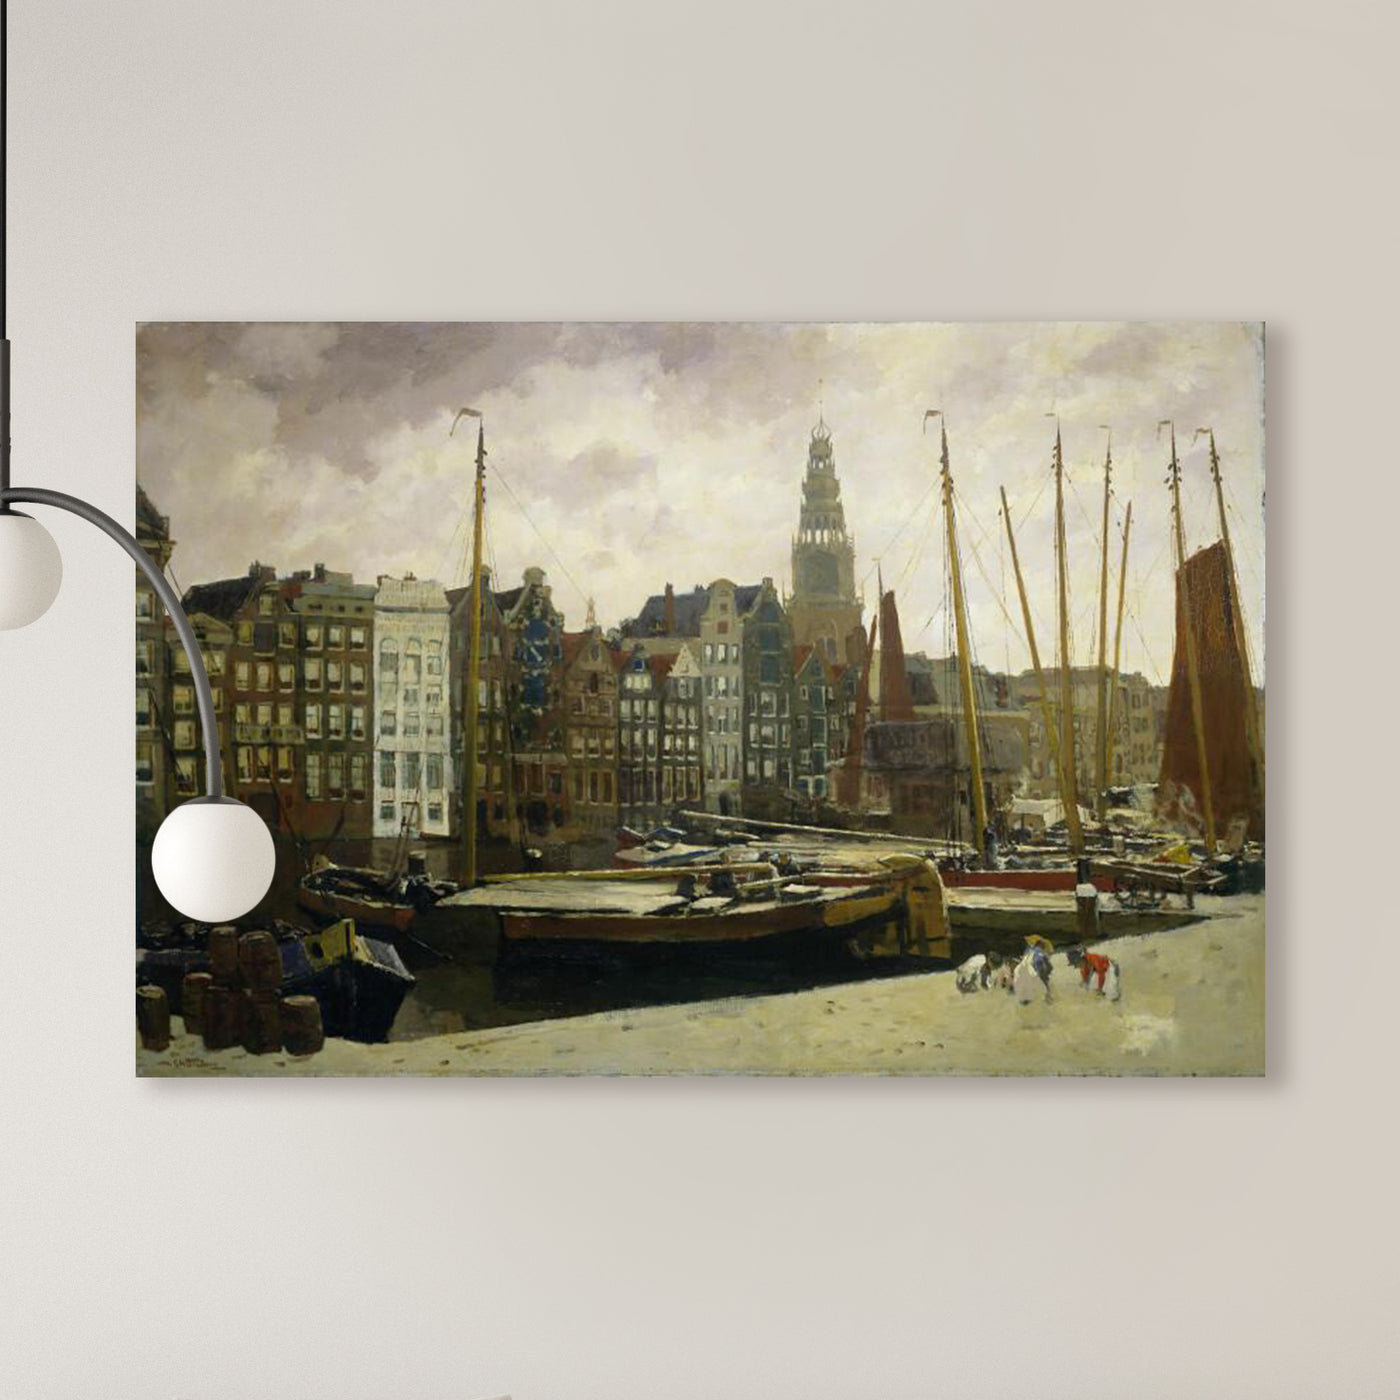 Der Damrak in Amsterdam, George Hendrik Breitner, 1903